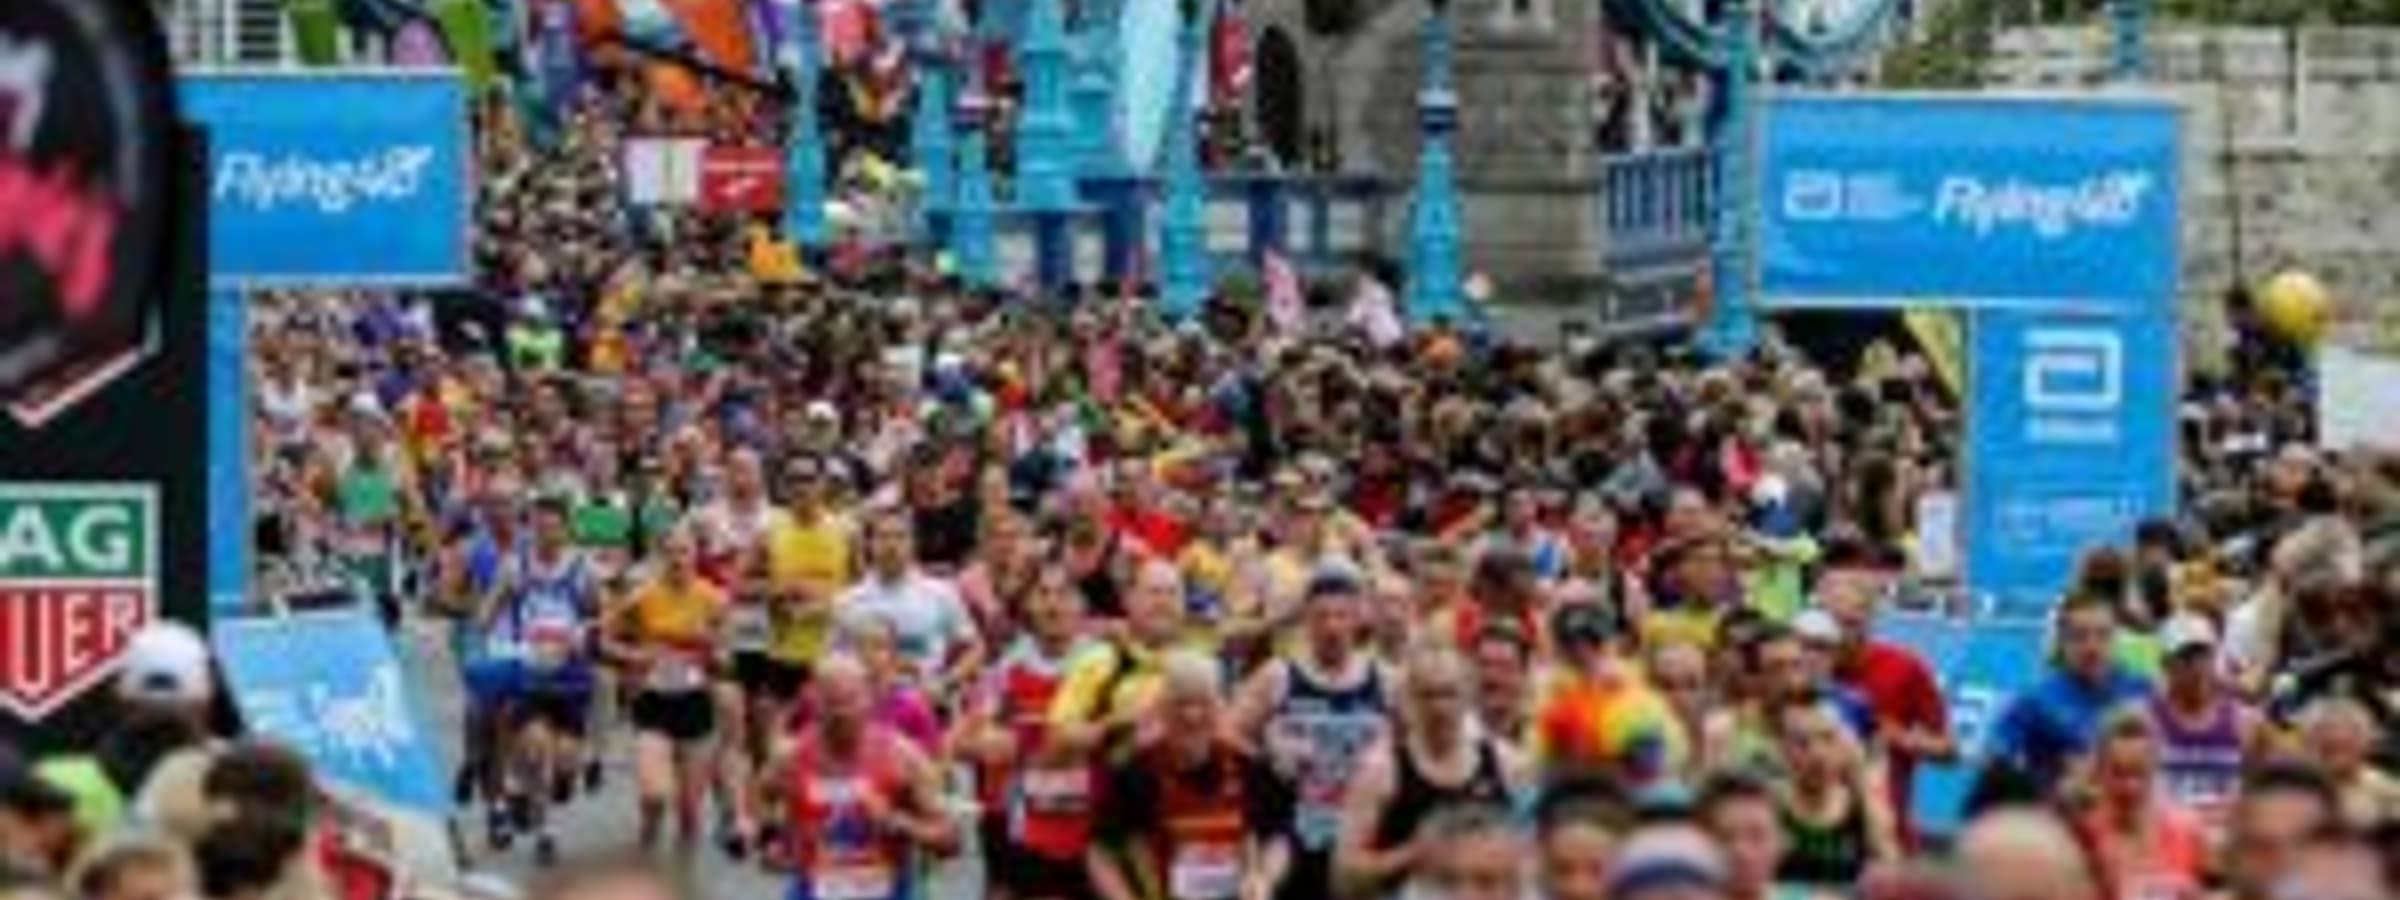 Dozens of people running with the headline "London Marathon 2020".